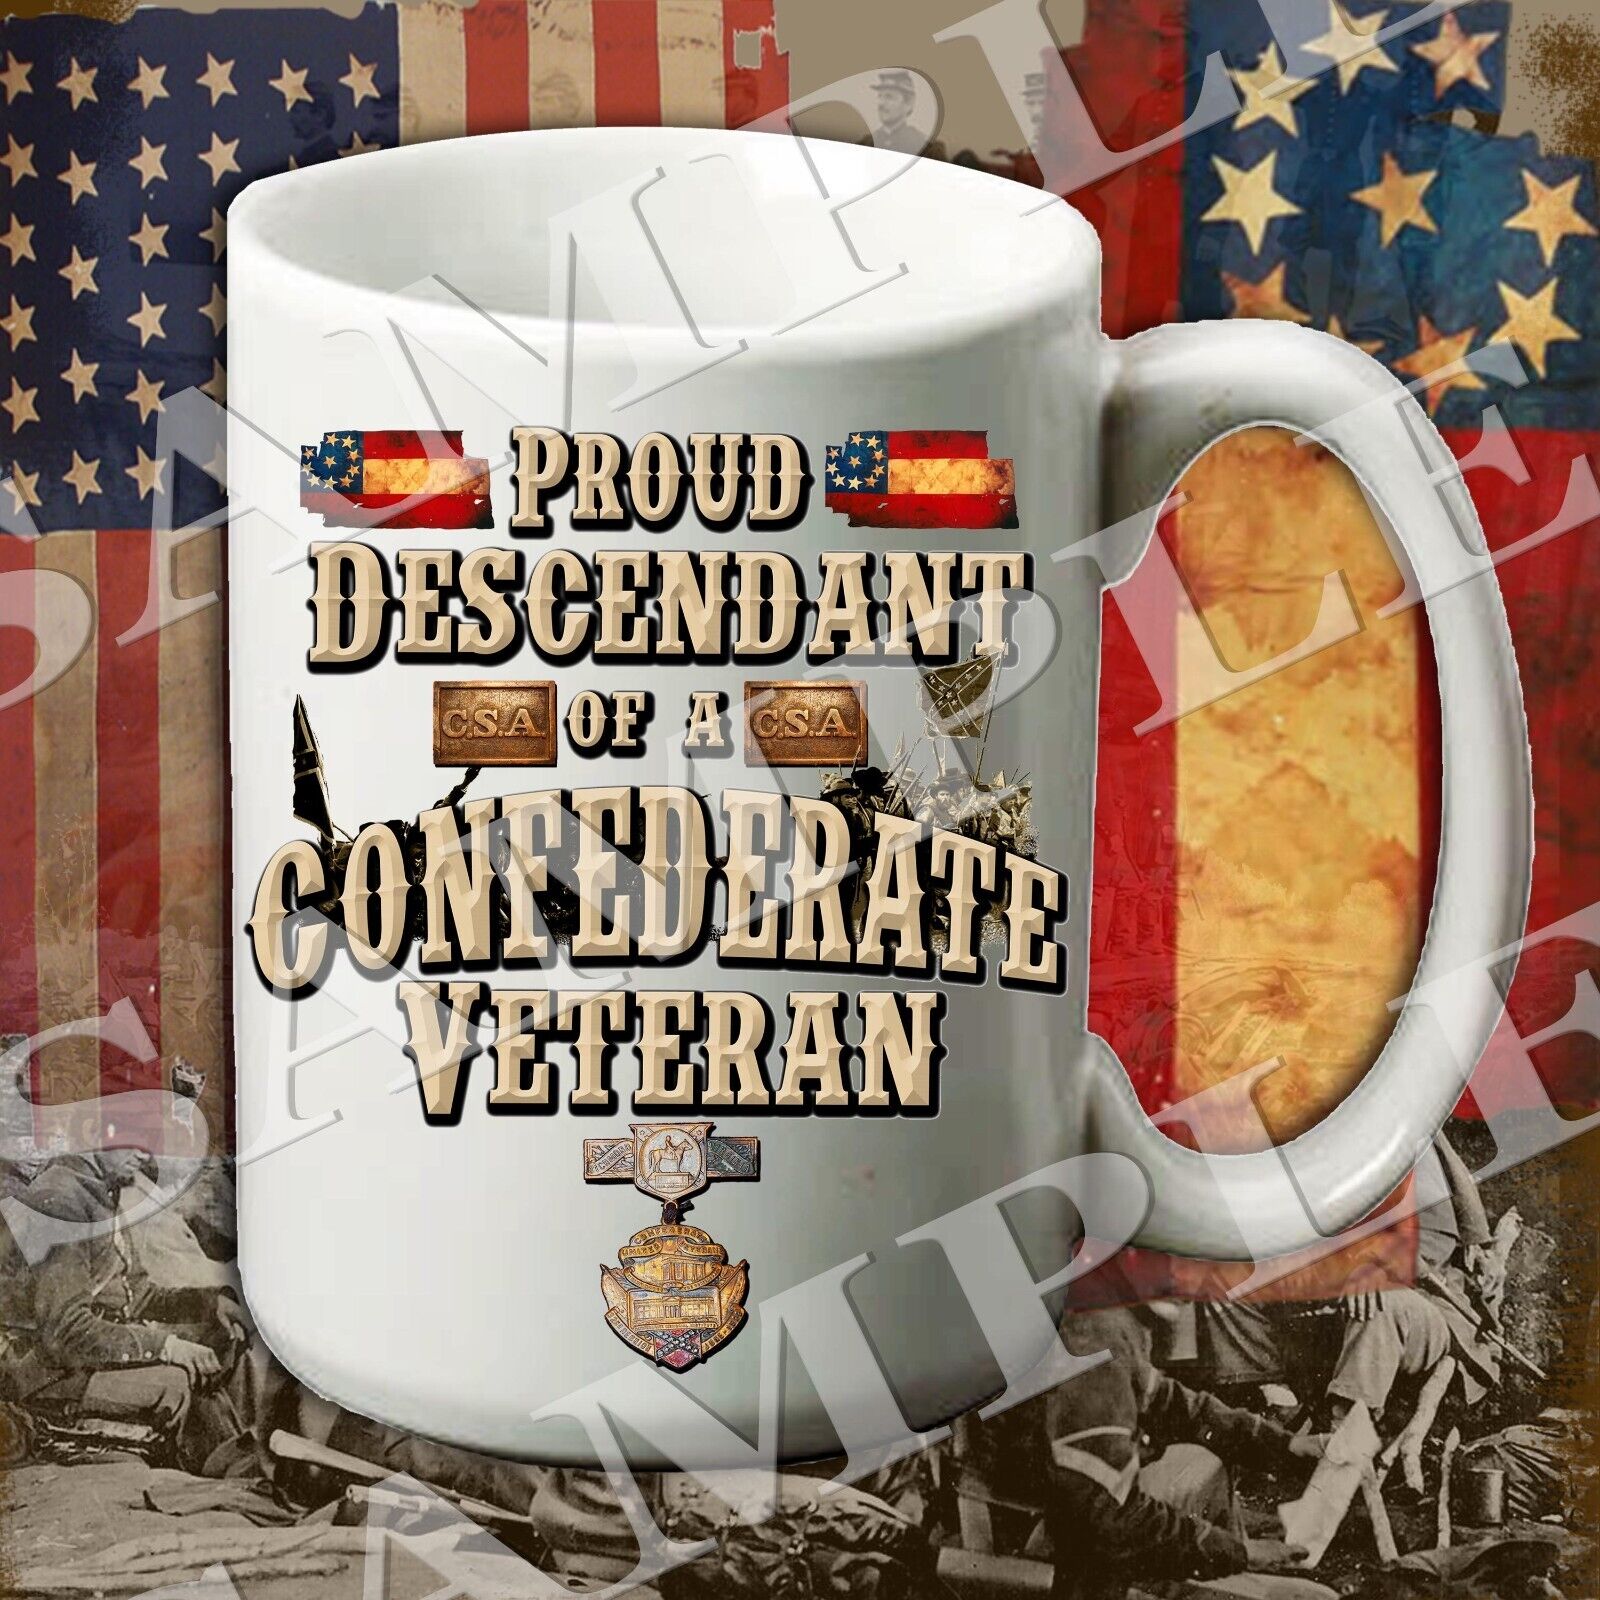 Proud Descendant of a Confederate Veteran 15-ounce Civil War themed coffee mug